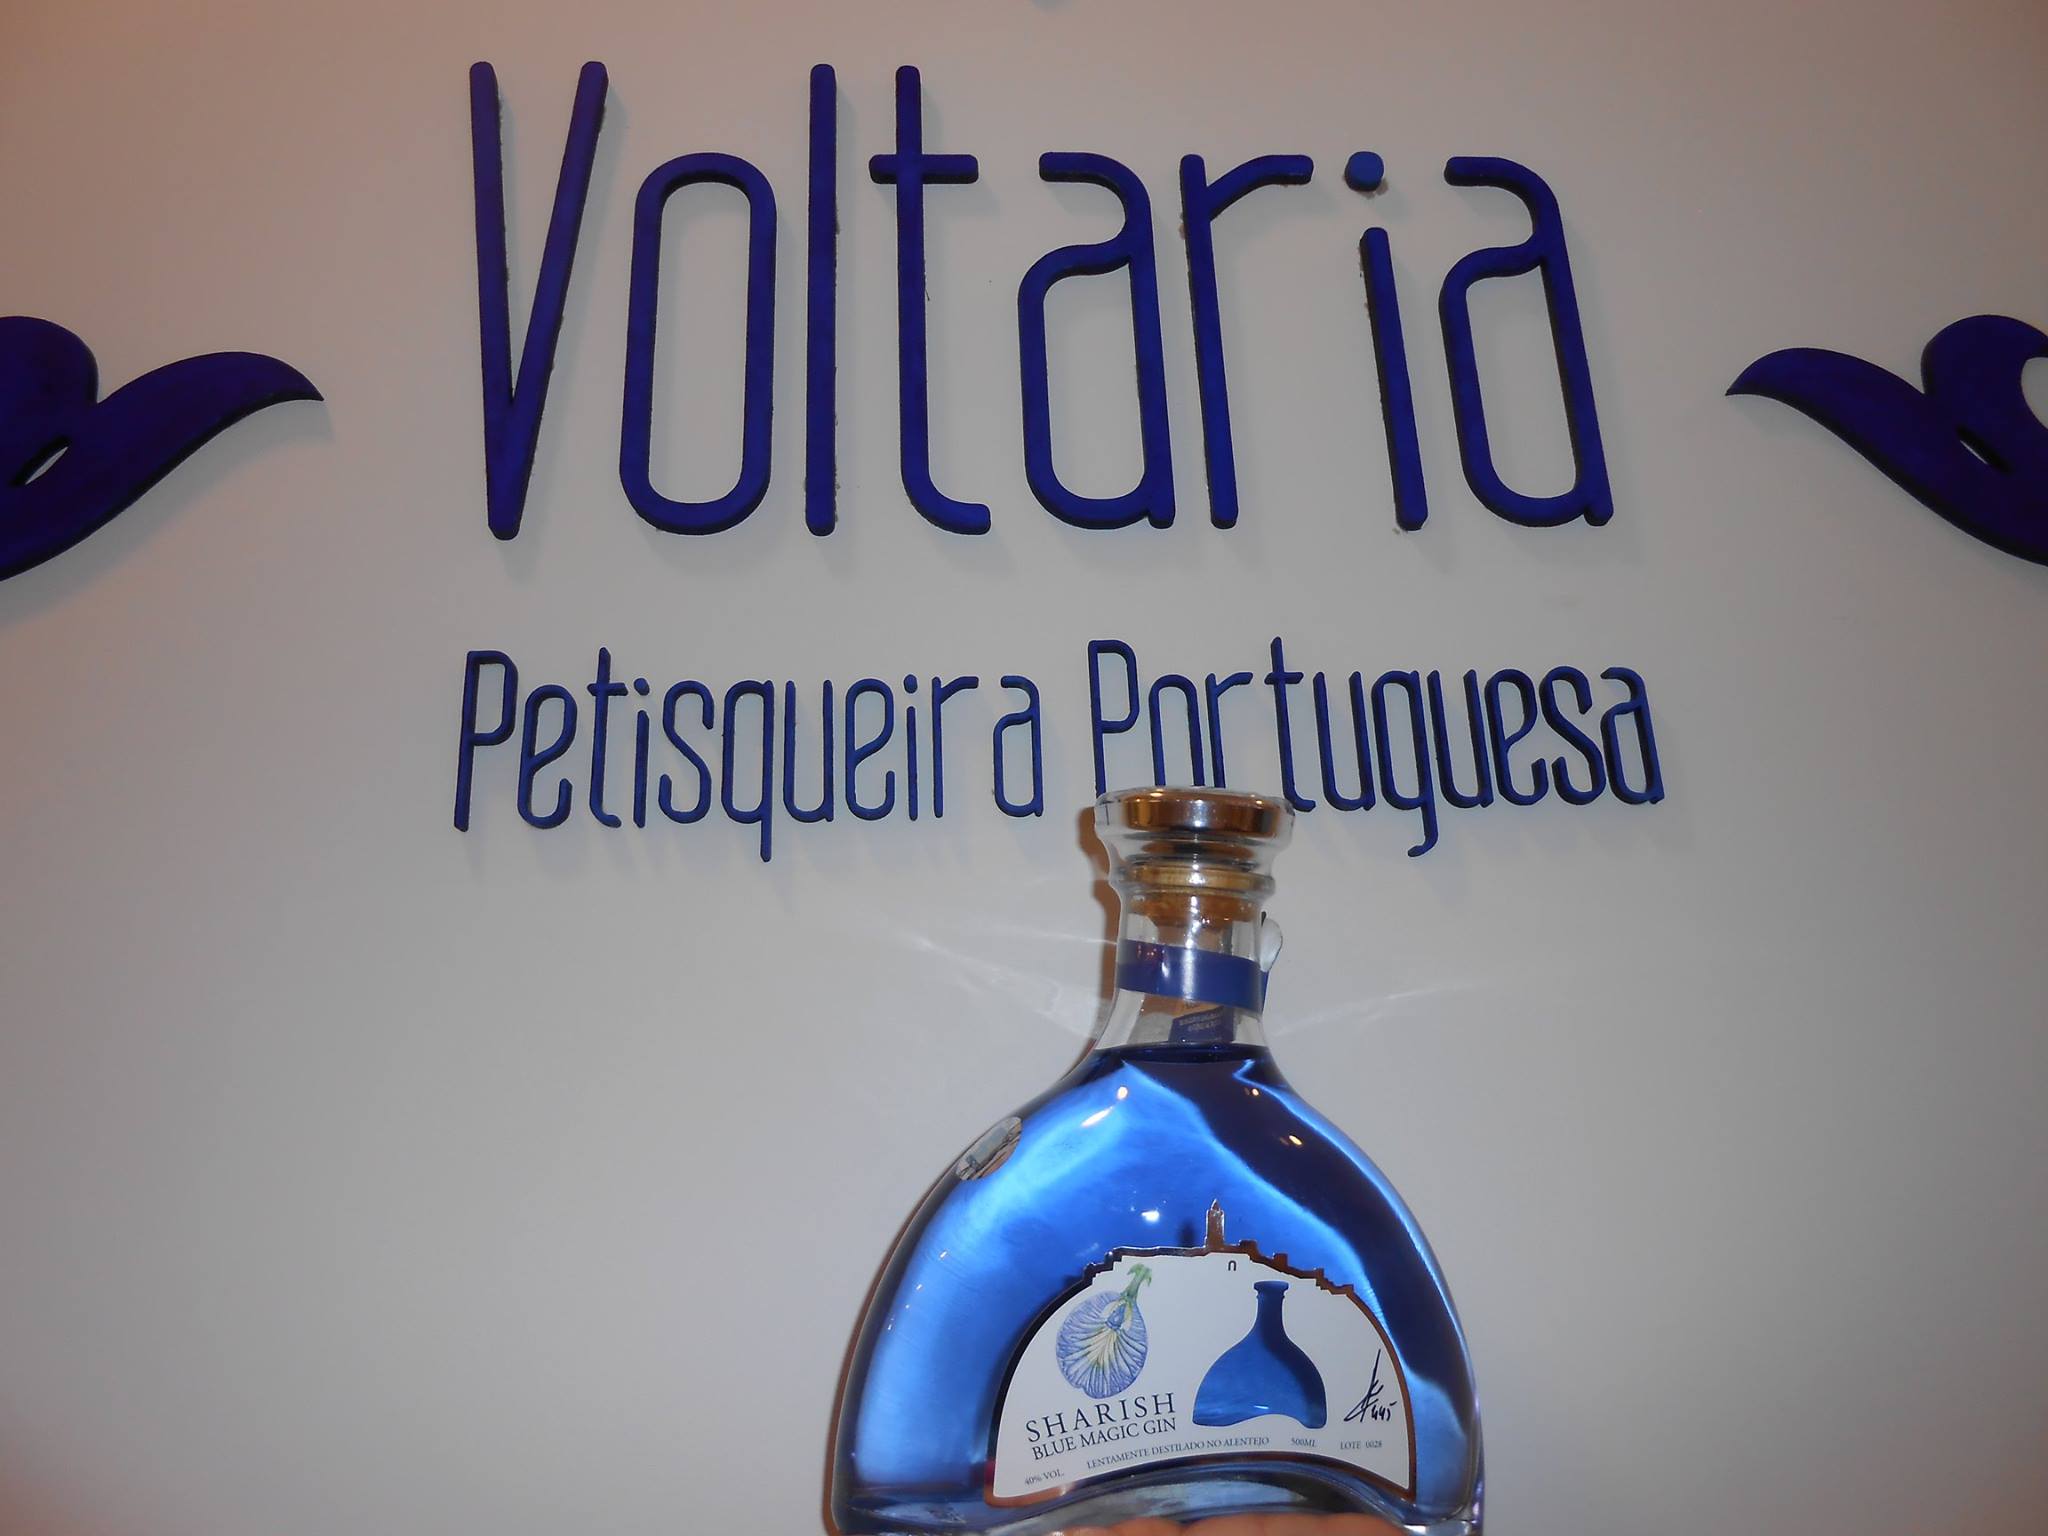 Voltaria - Petisqueira Portuguesa